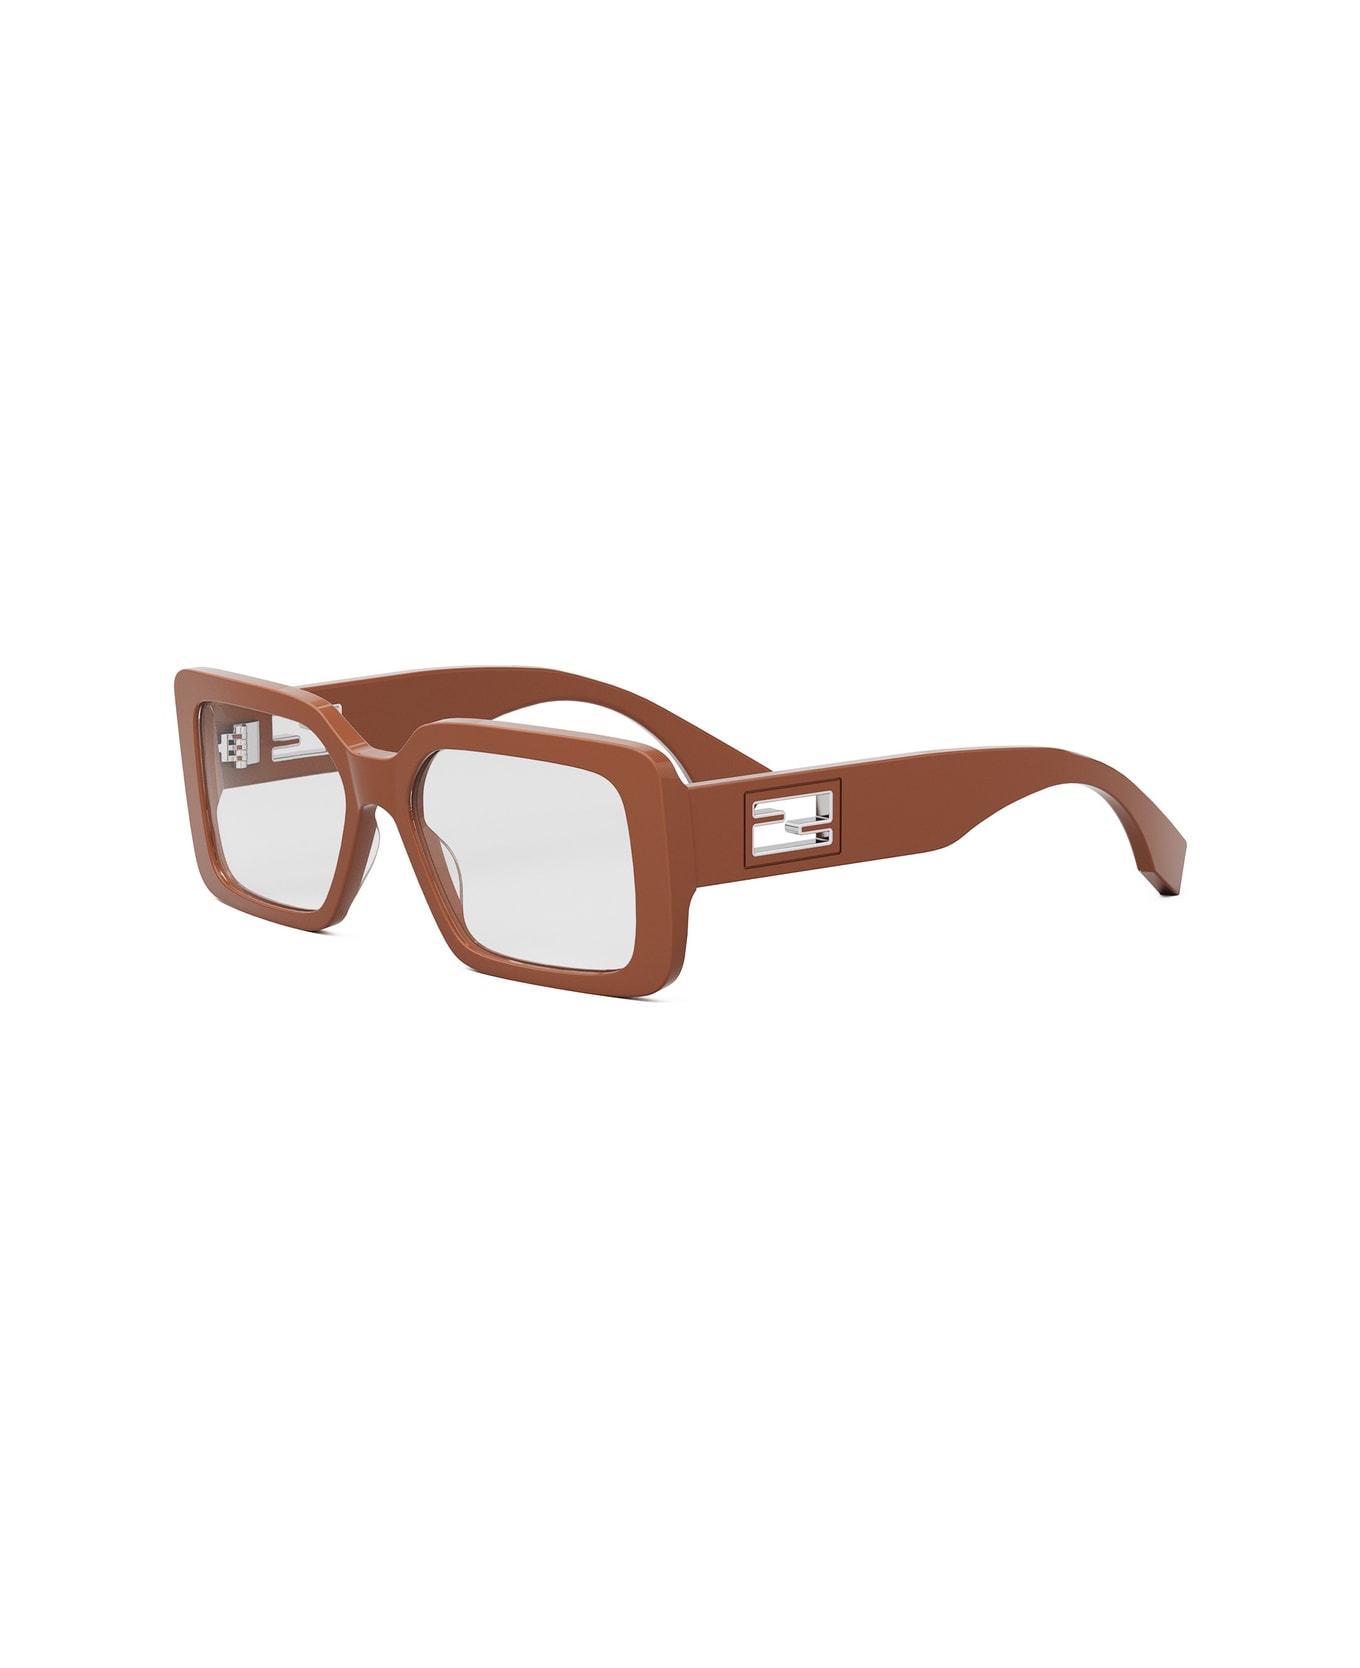 Fendi Eyewear Fe50072i 050 Glasses - Arancione アイウェア